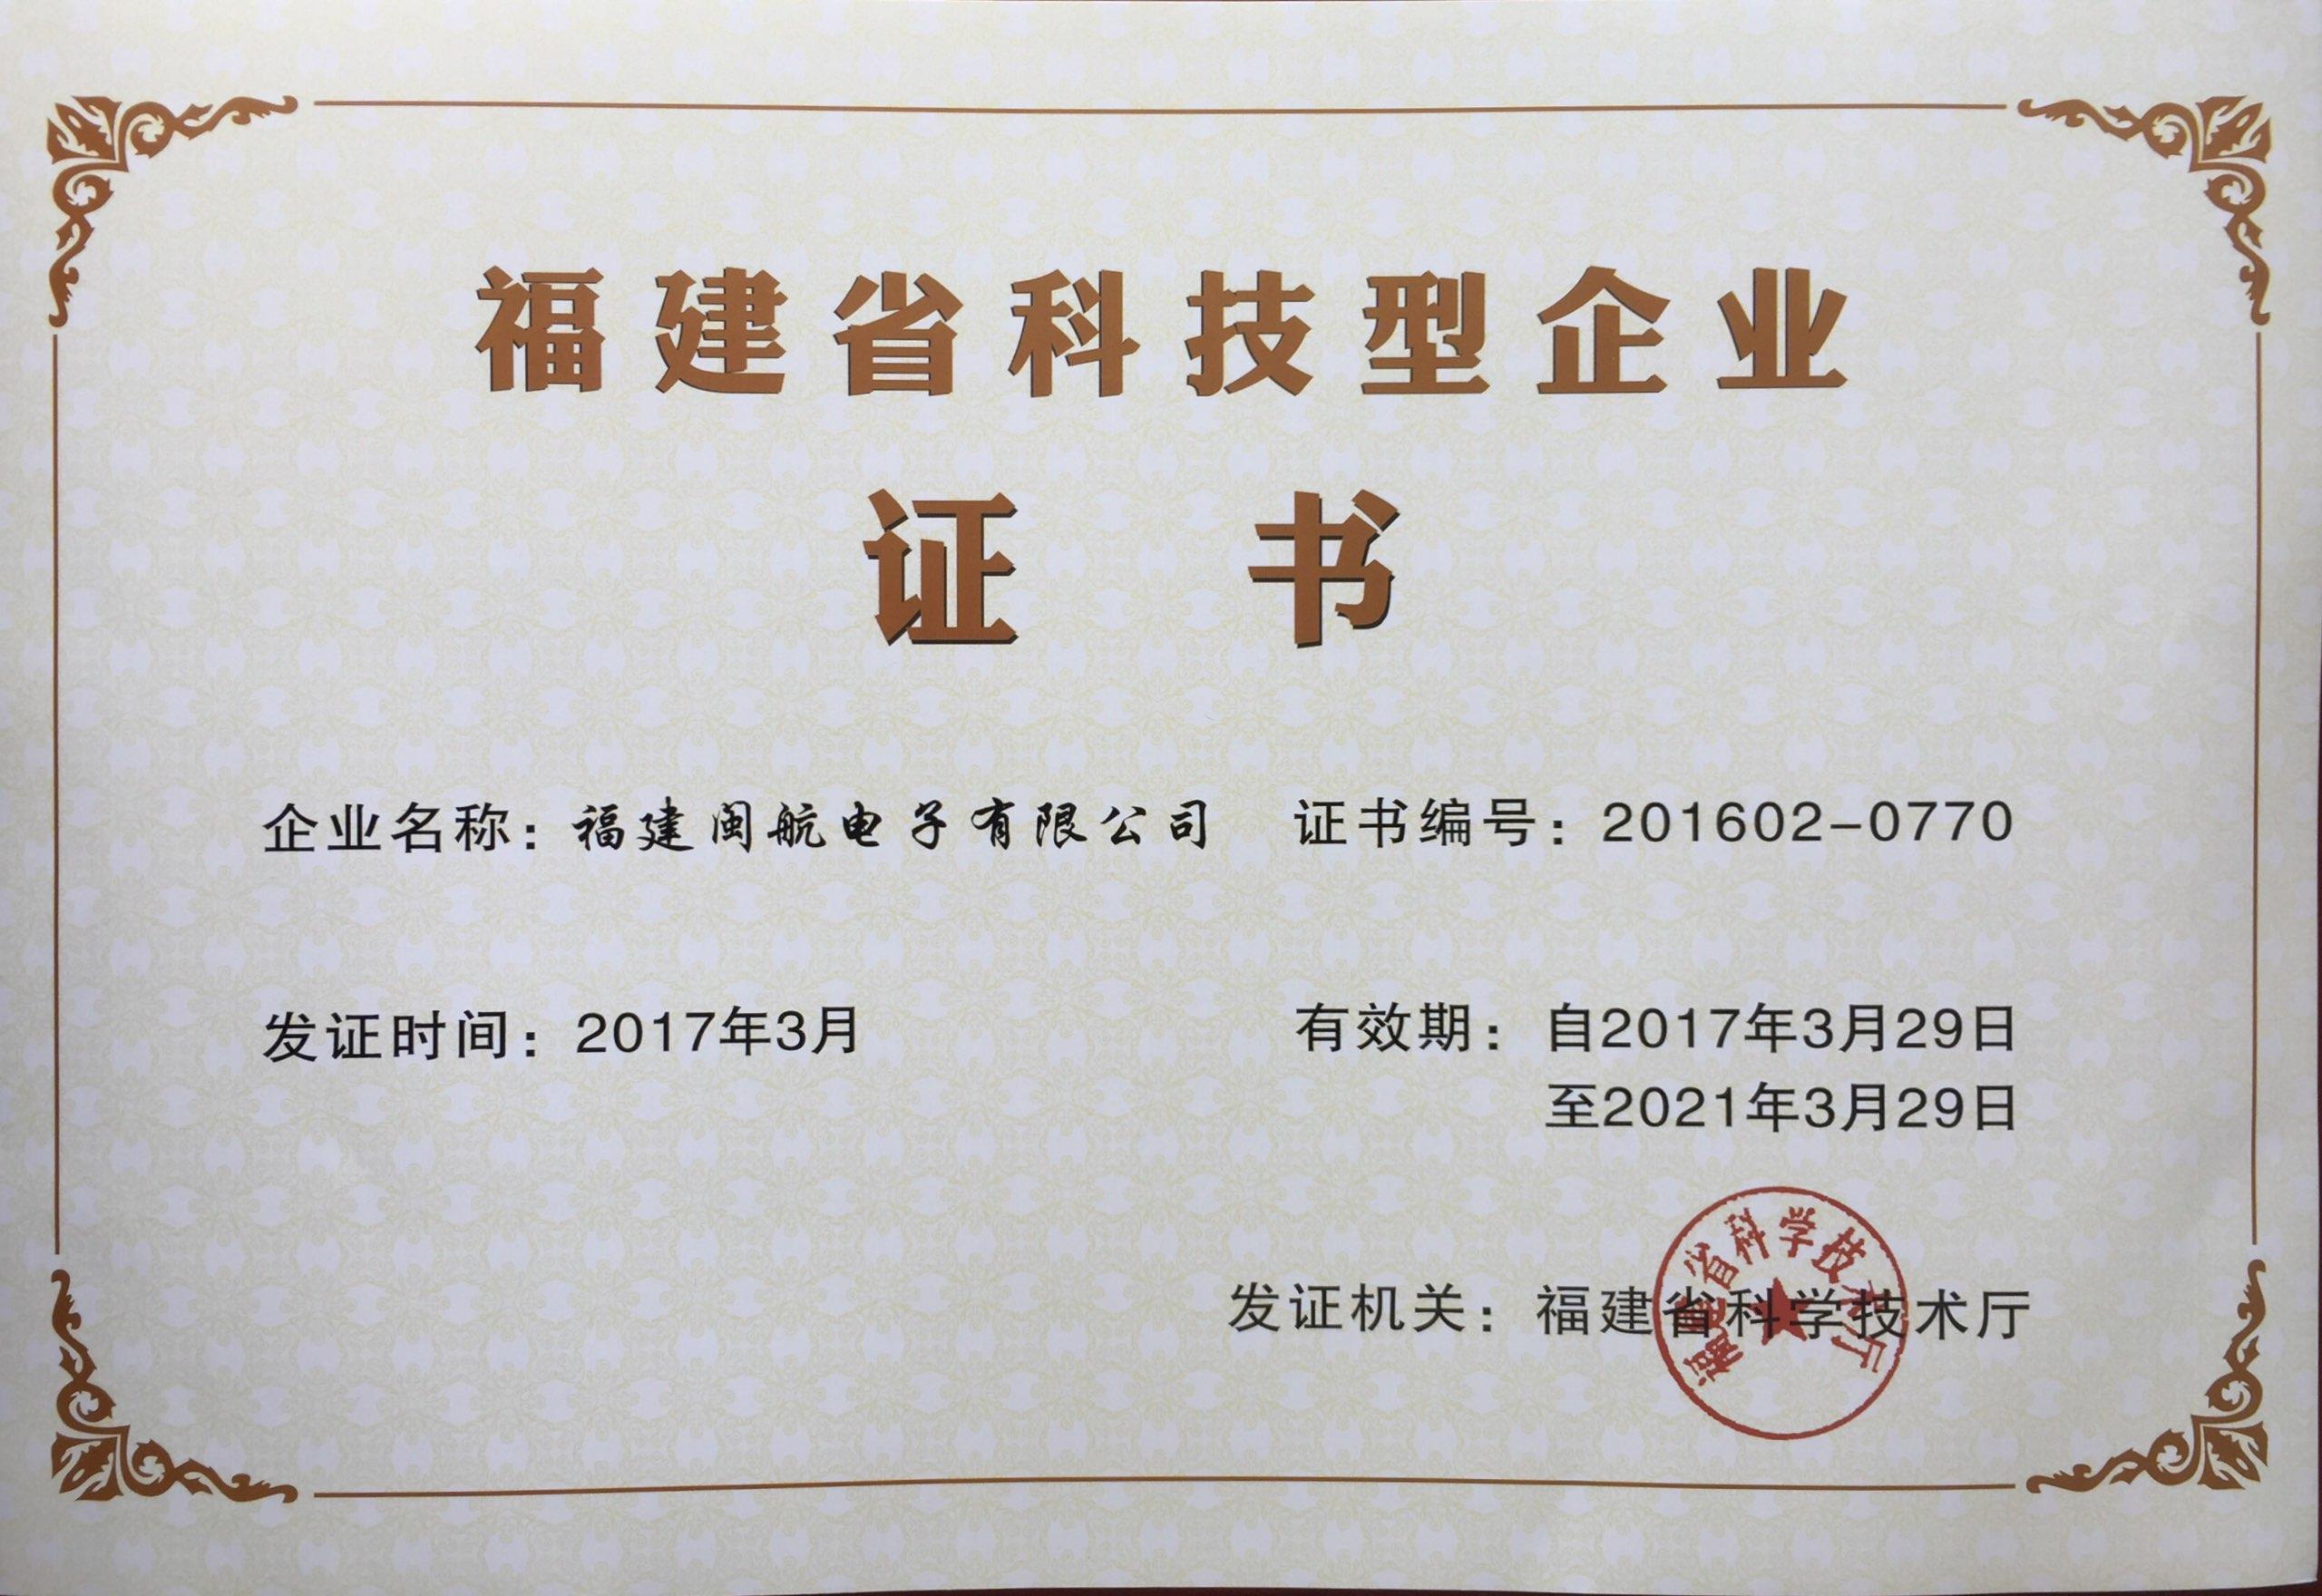 Fujian Science and Technology Enterprise Certificate 2017-2021